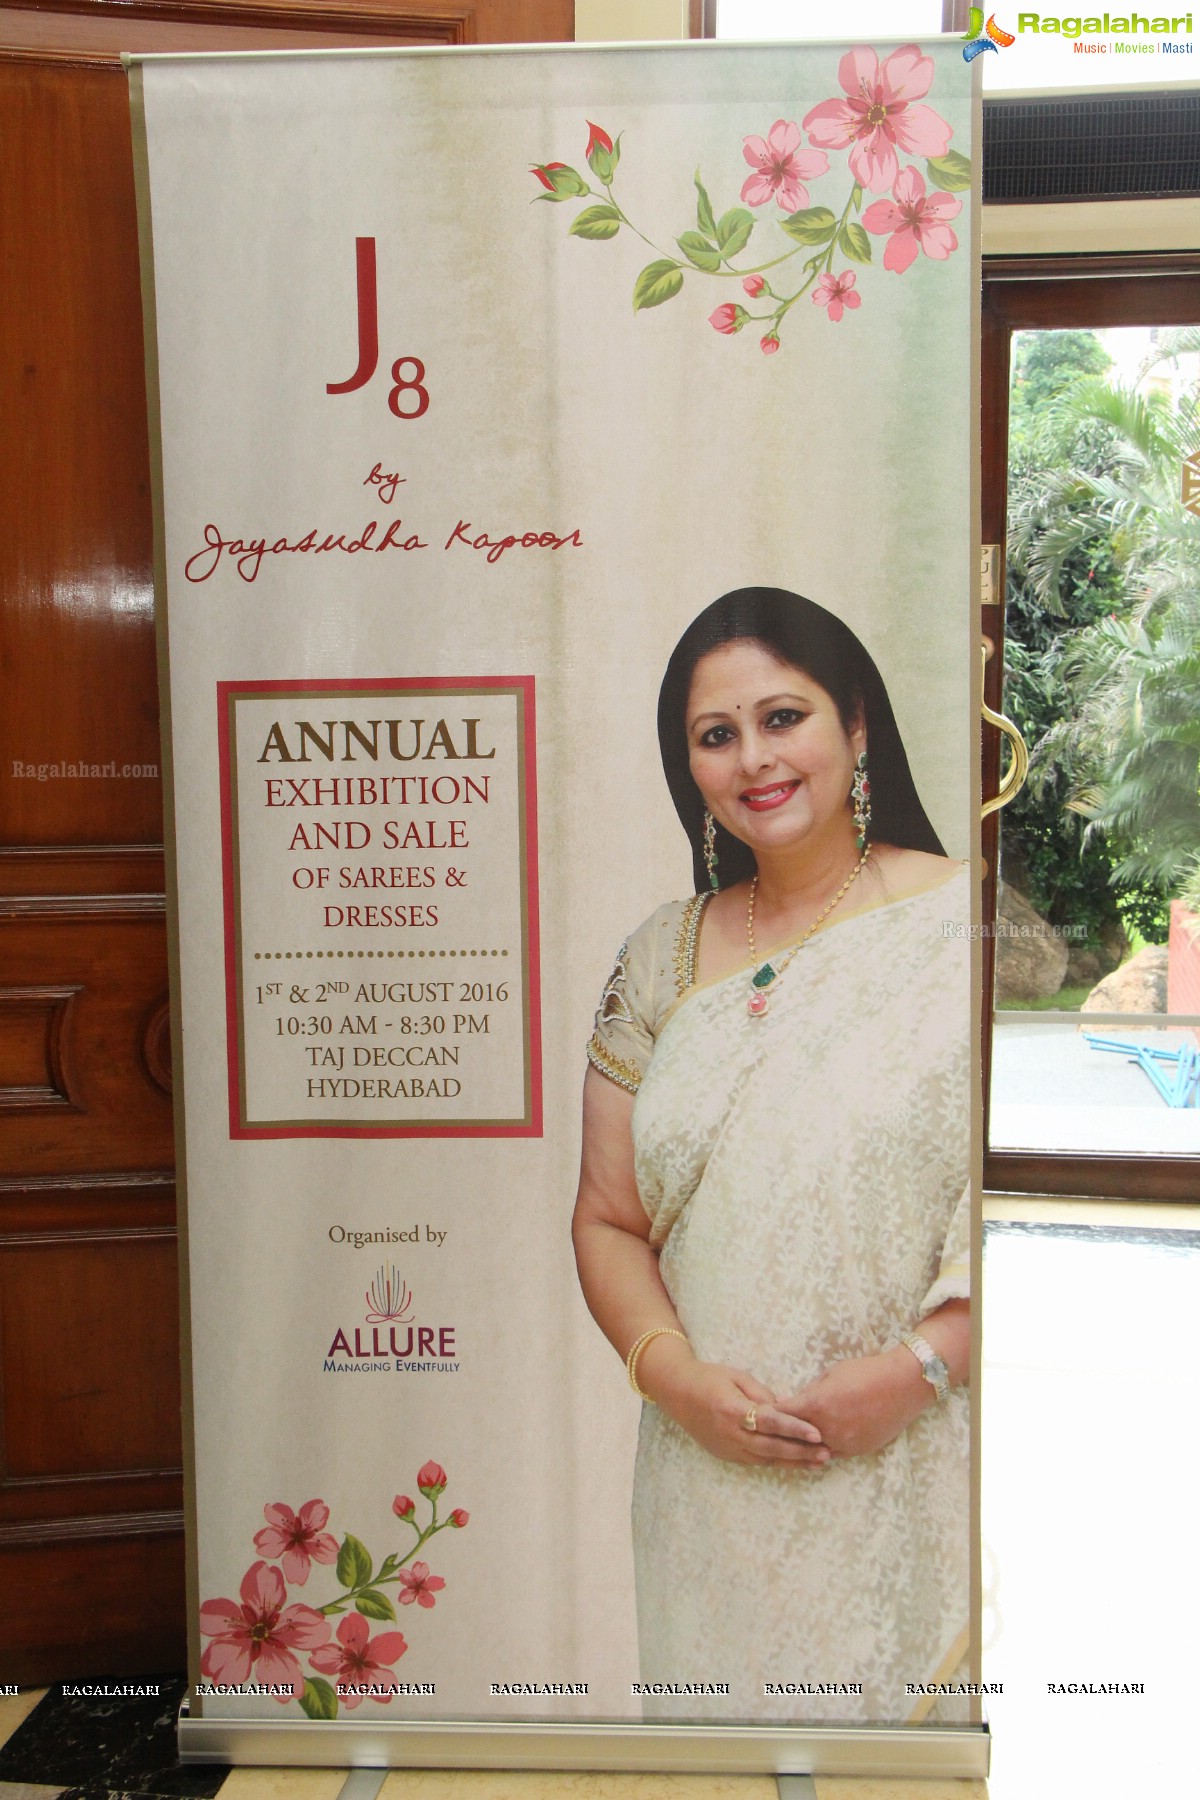 J8 by Jayasudha Kapoor - Annual Exhibition and Sale at Taj Deccan, Hyderabad